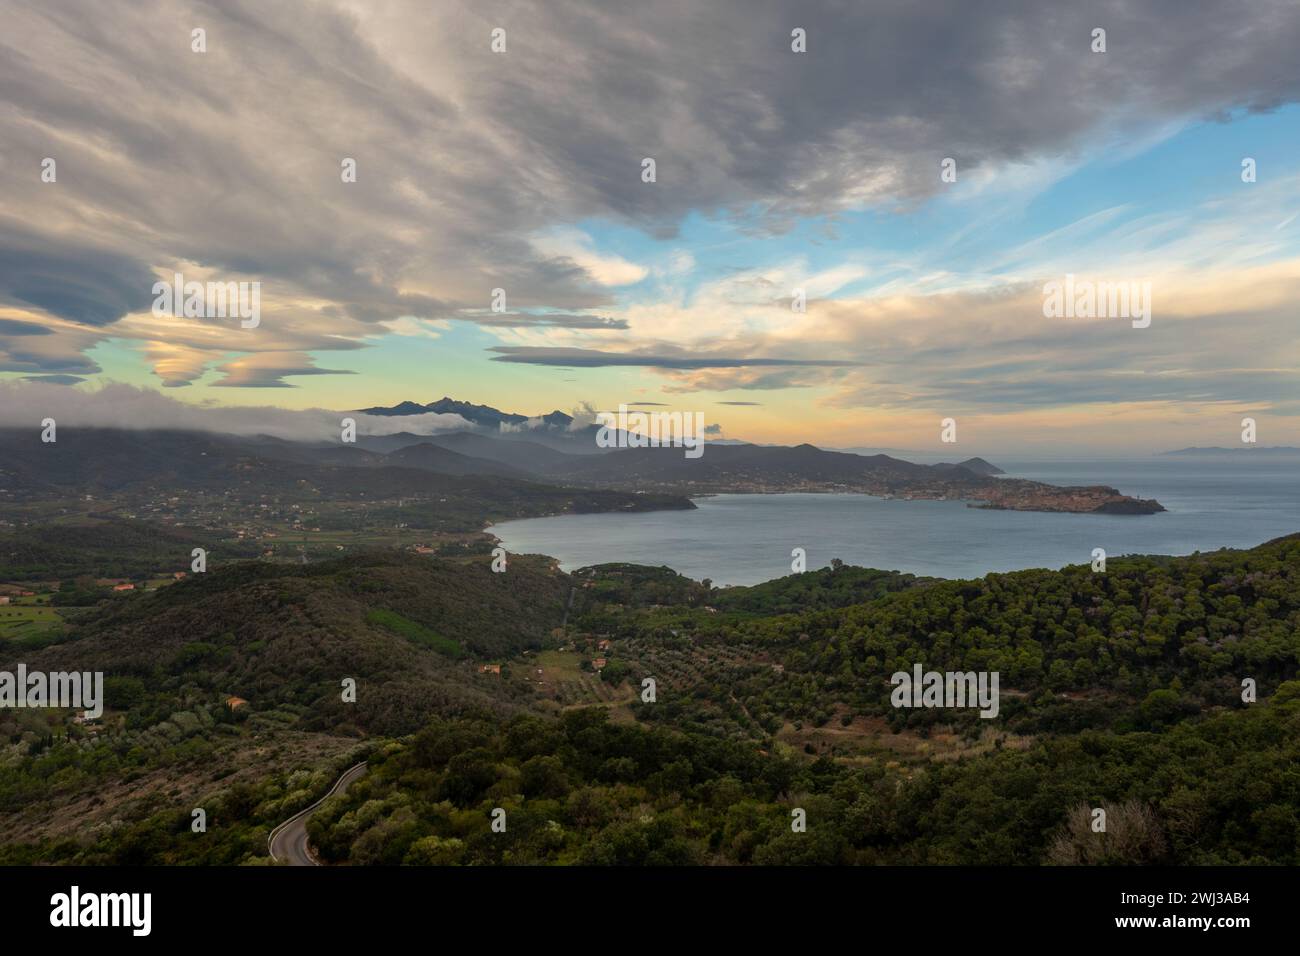 View of curvy mountain road and Portoferraio Bay on Elba Island at sunrise Stock Photo